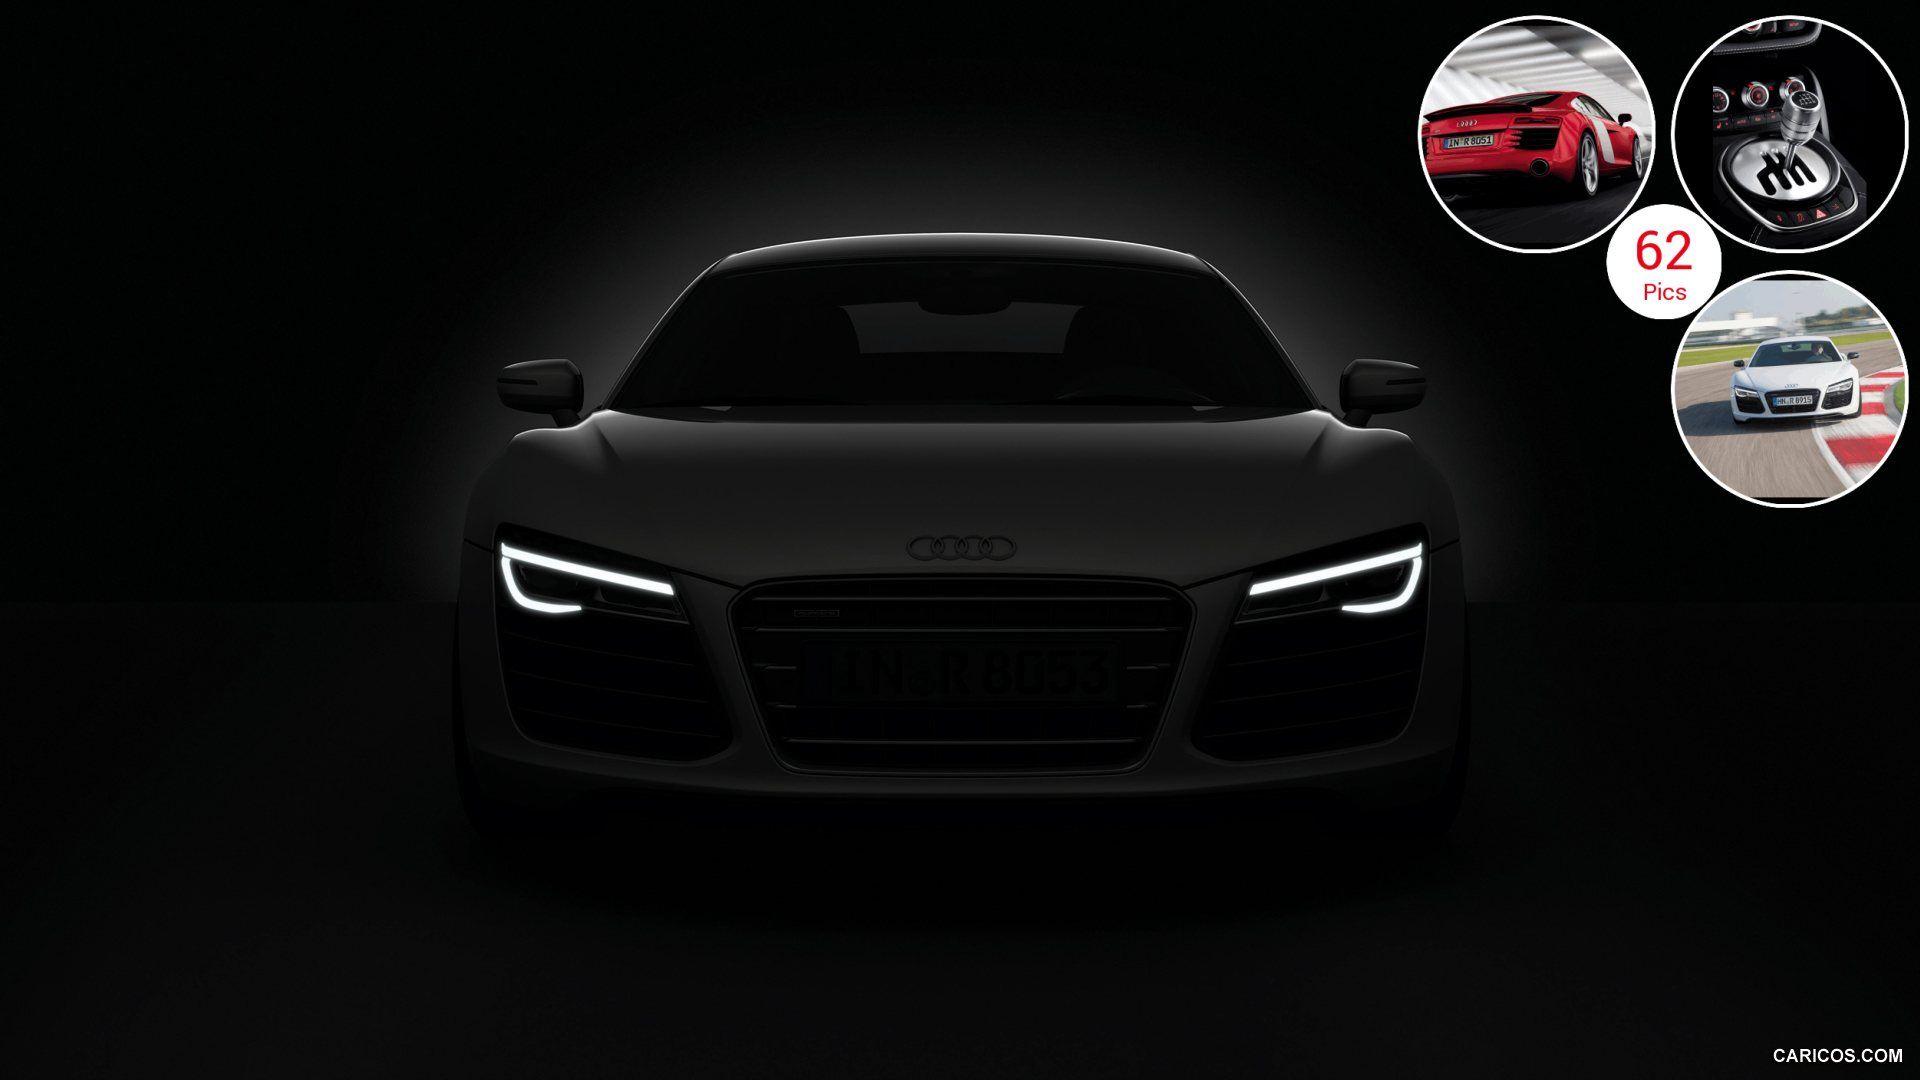 Обои ауди на айфон. Audi r8 на iphone. Audi r8 led. Headlights Audi r8. Ауди обои андроид r8 черный.